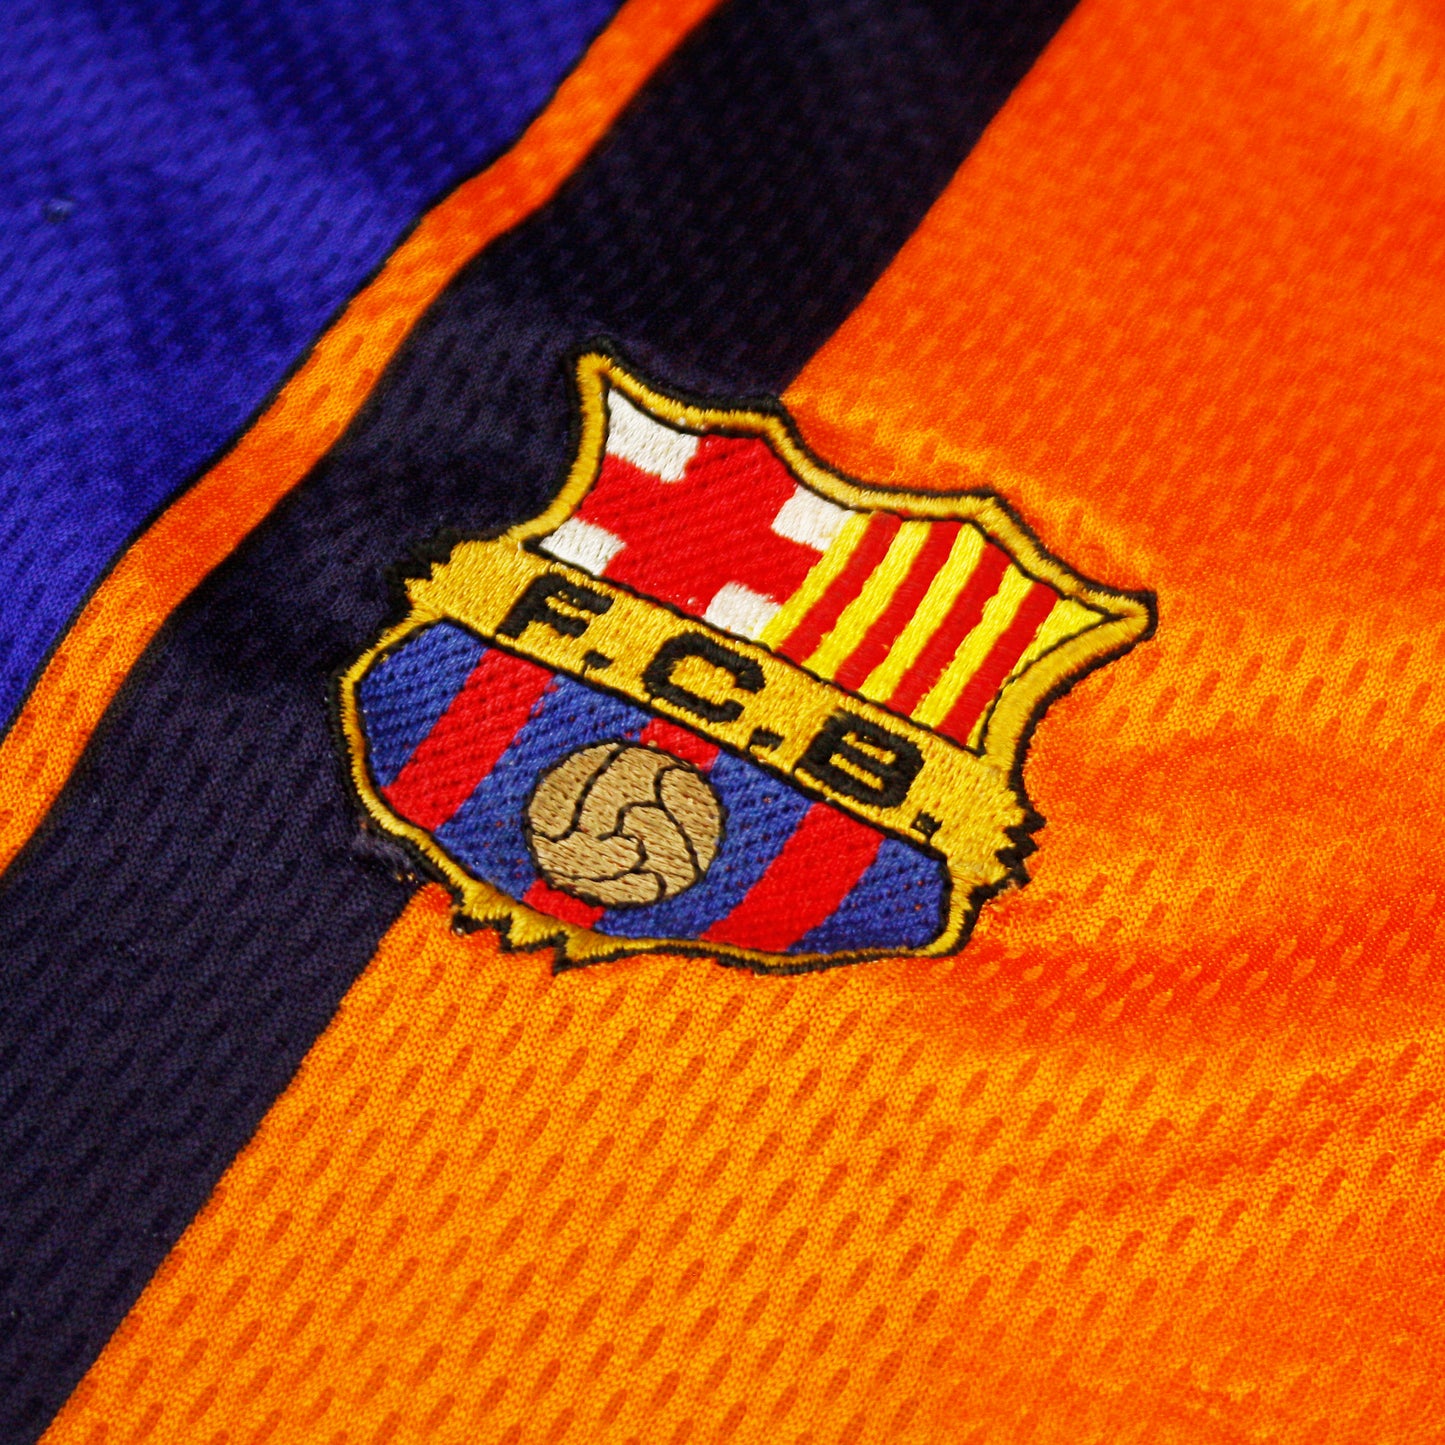 Barcelona 97/98 • Camiseta Visitante • S